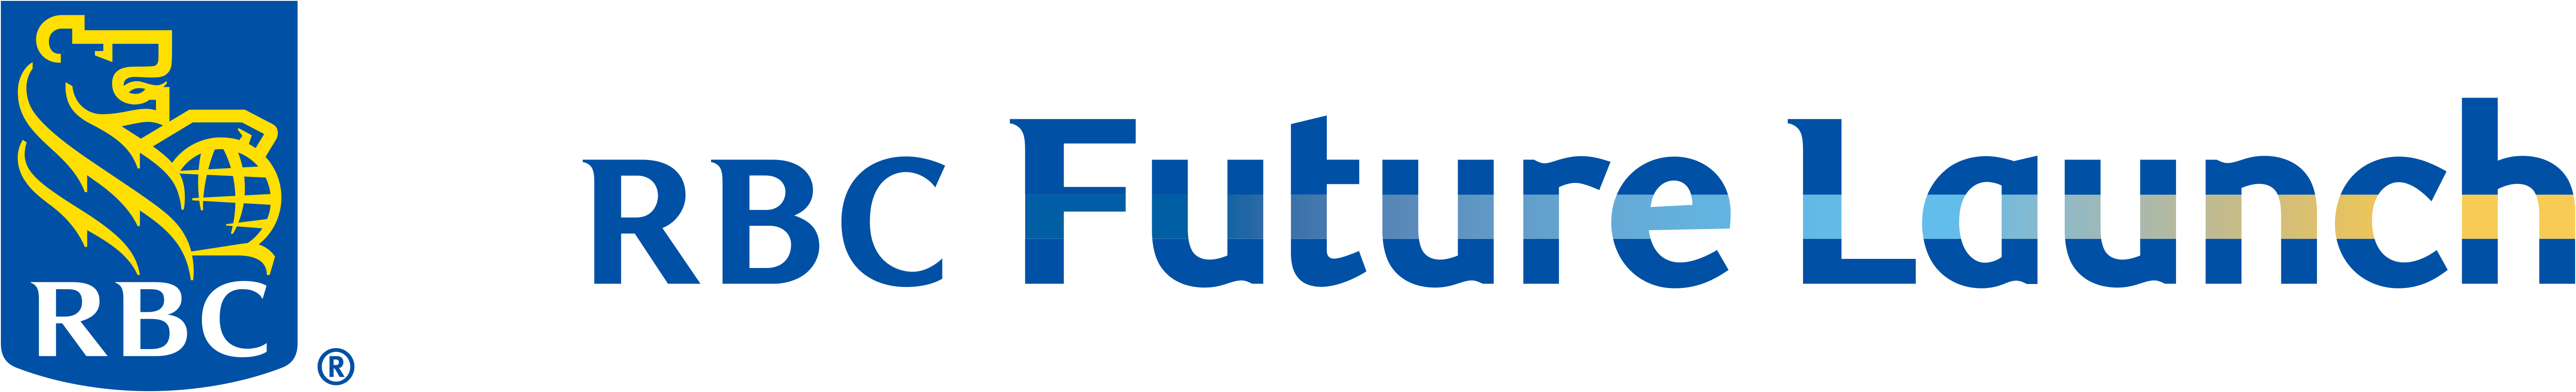 rbc future launch logo